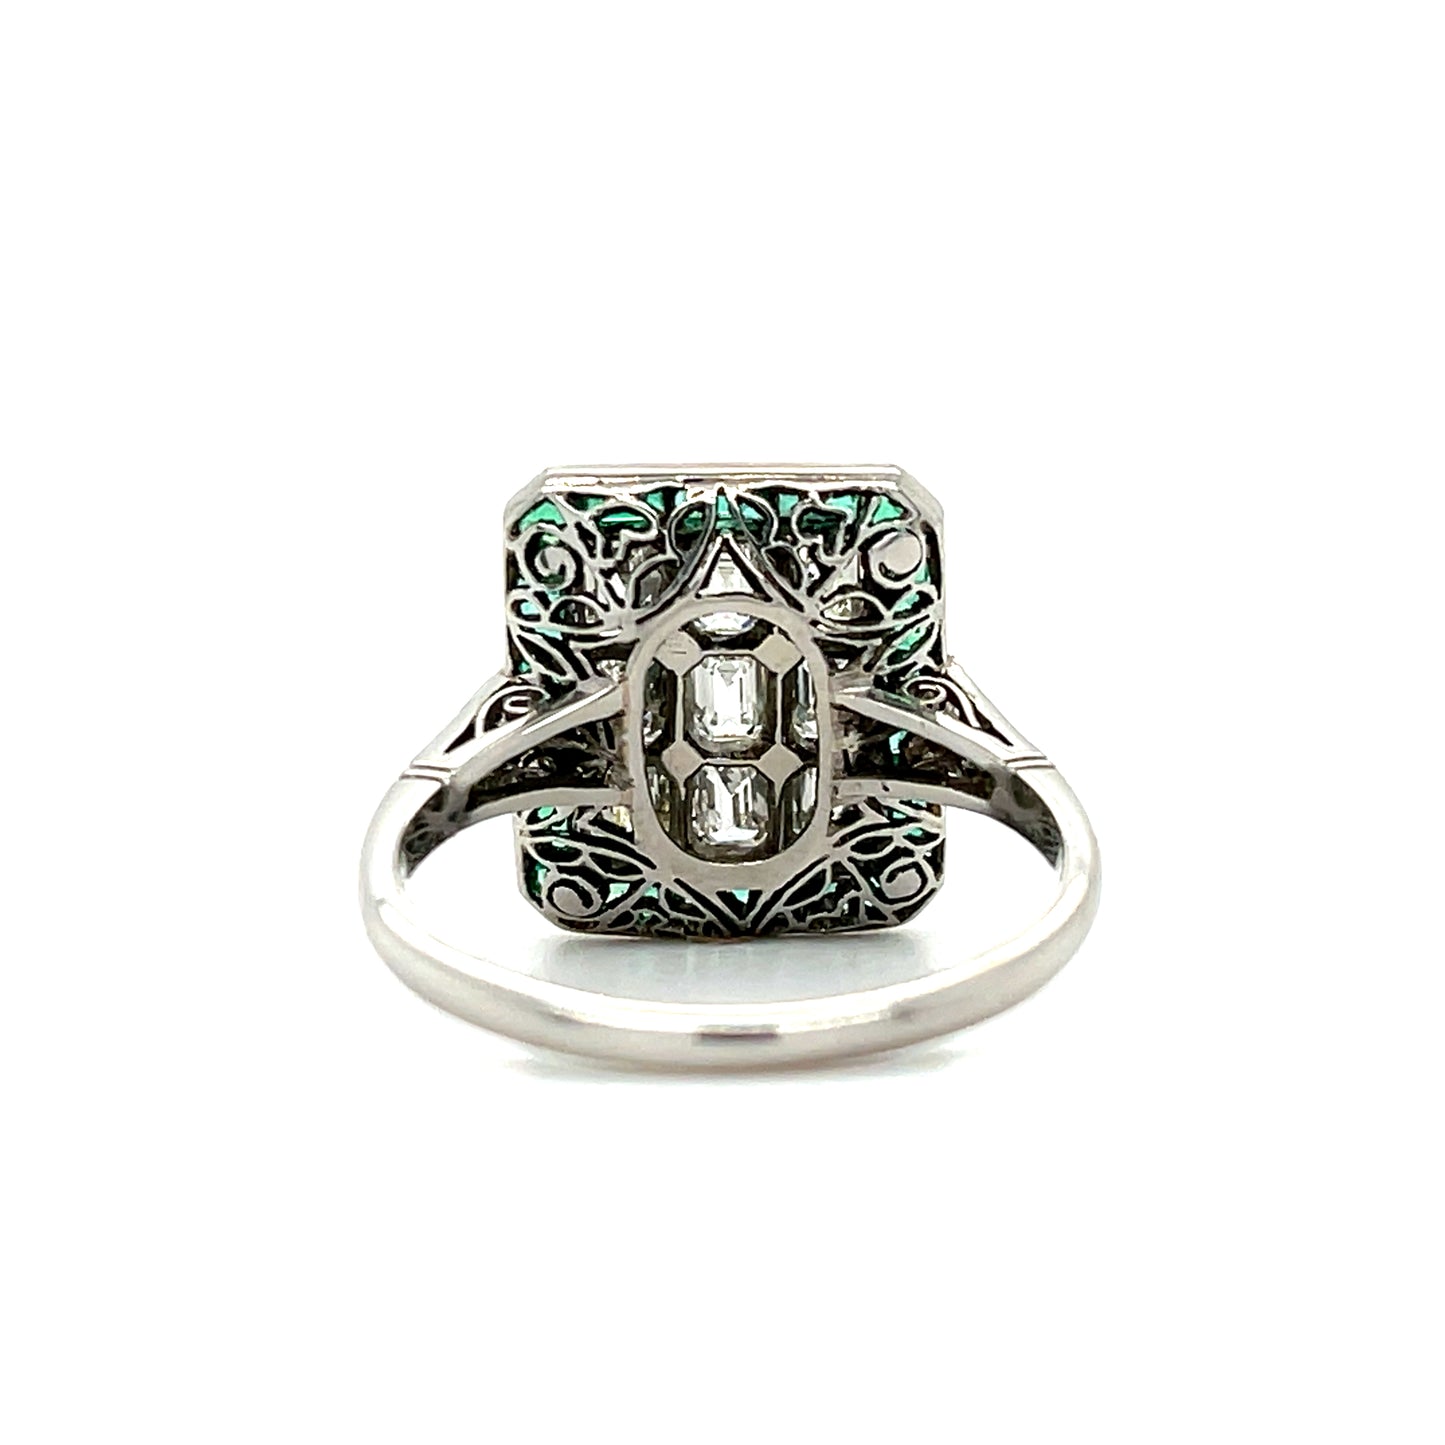 1.10ct Emerald Cut Diamonds Handmade & Inspired Platinum Ring 1.30ct Calibre Emeralds